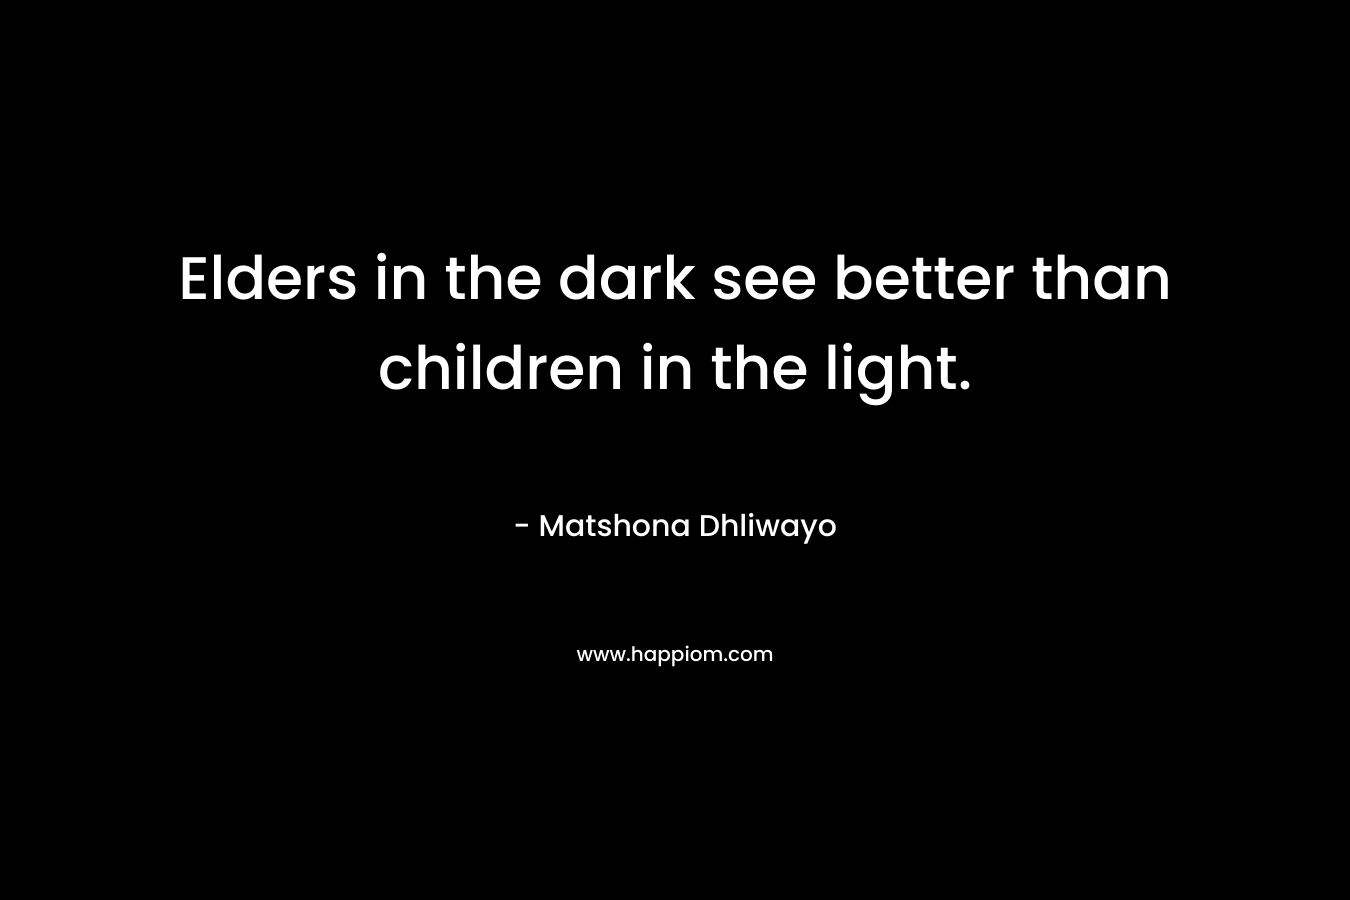 Elders in the dark see better than children in the light.